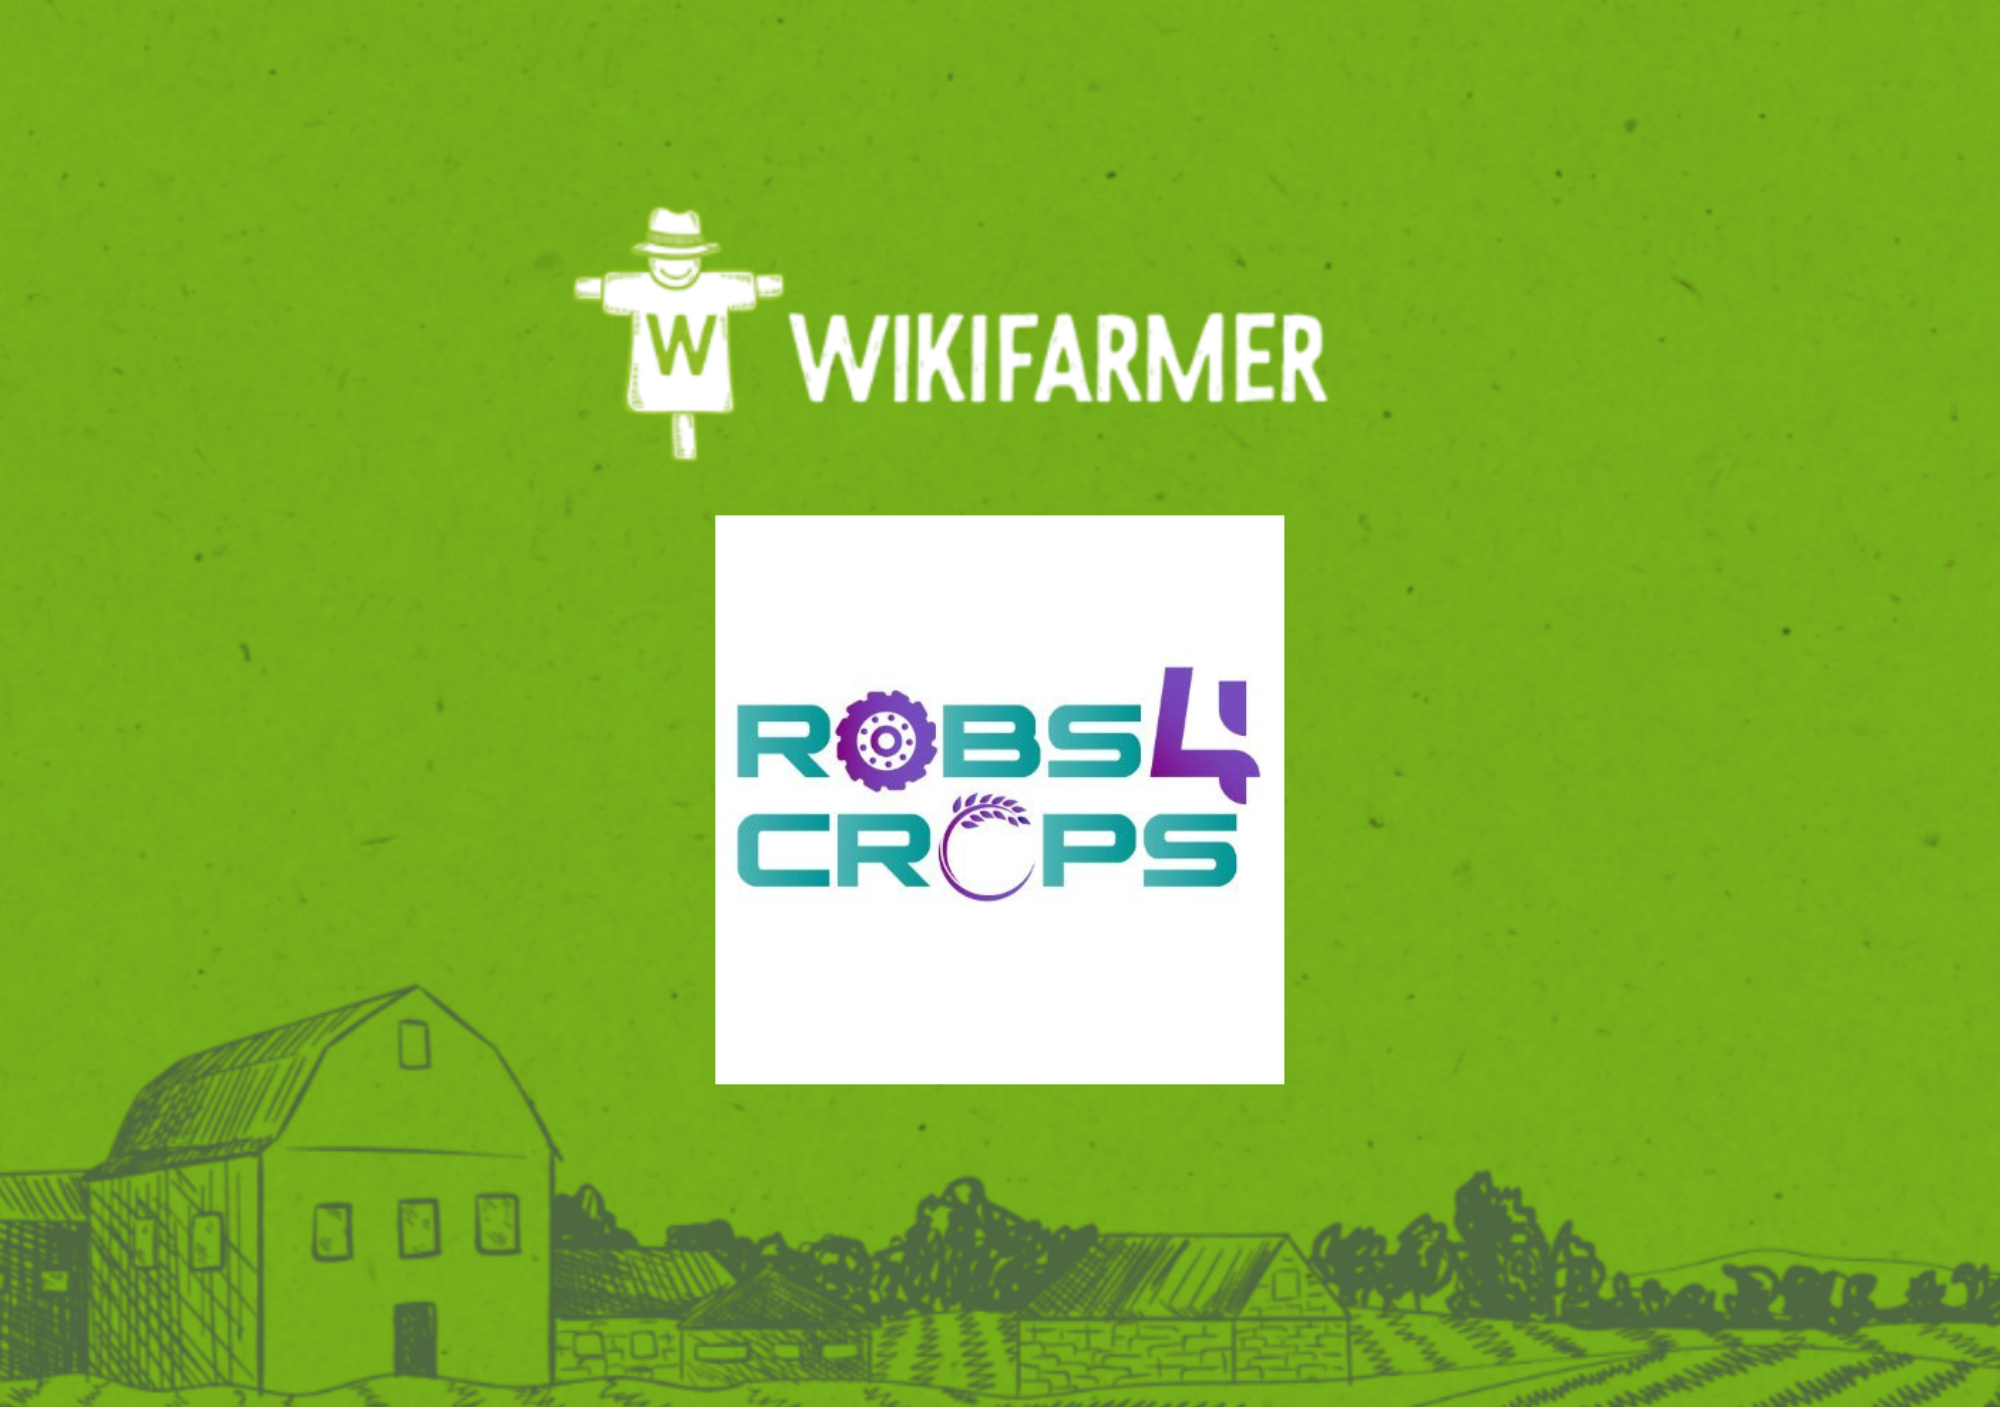 Partnership between Wikifarmer and ROBS4CROPS